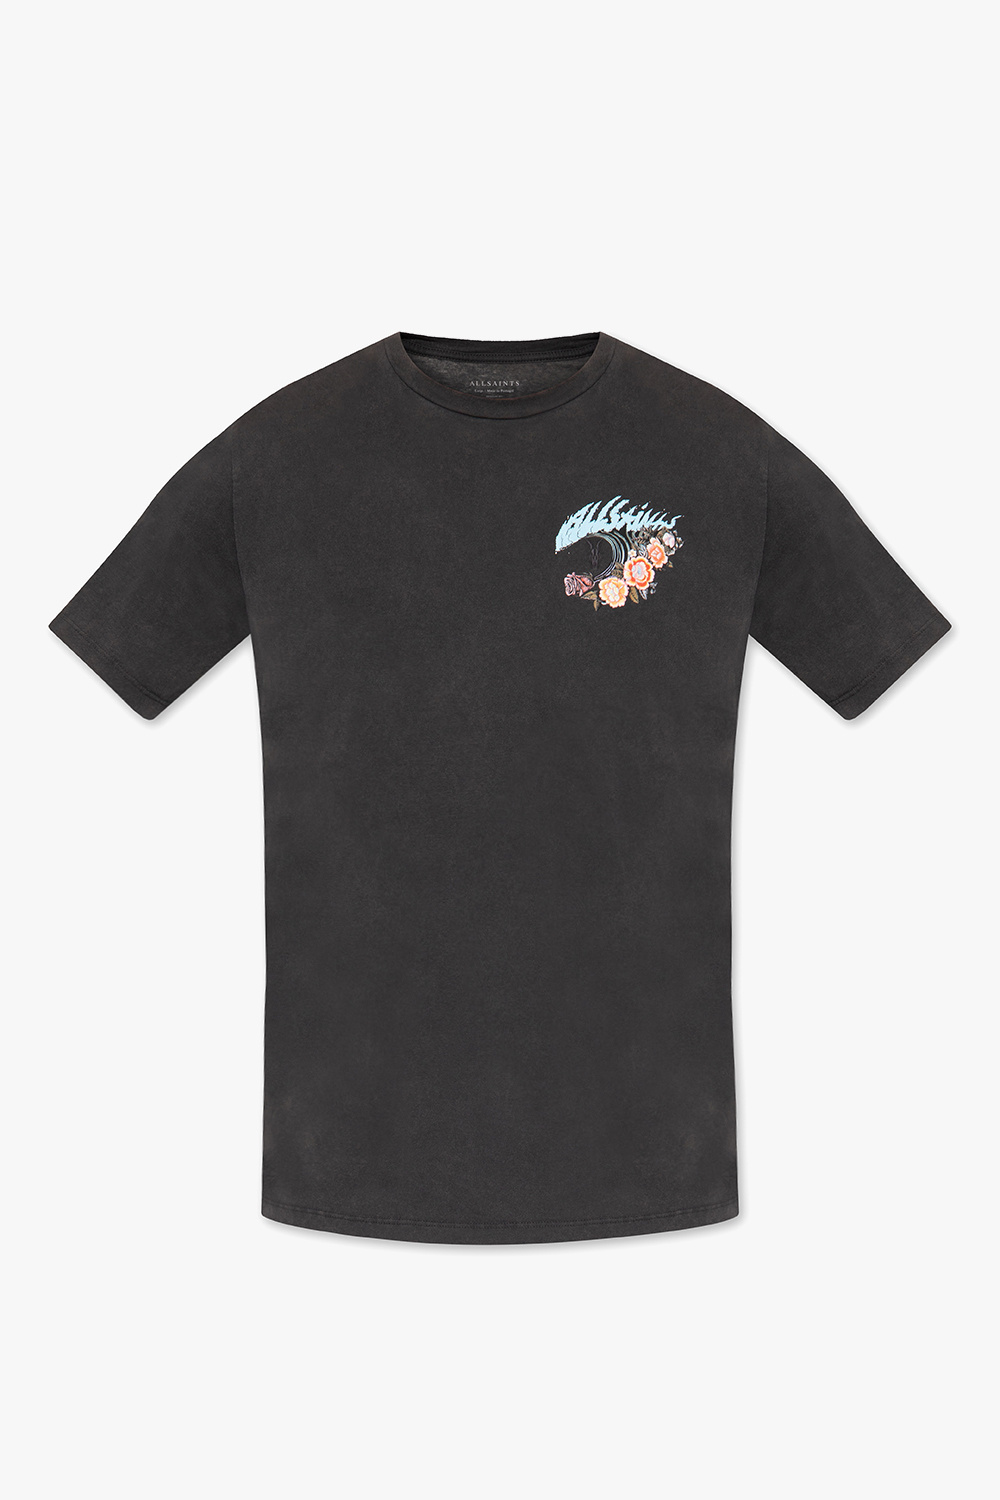 AllSaints ‘Pitch’ printed T-shirt